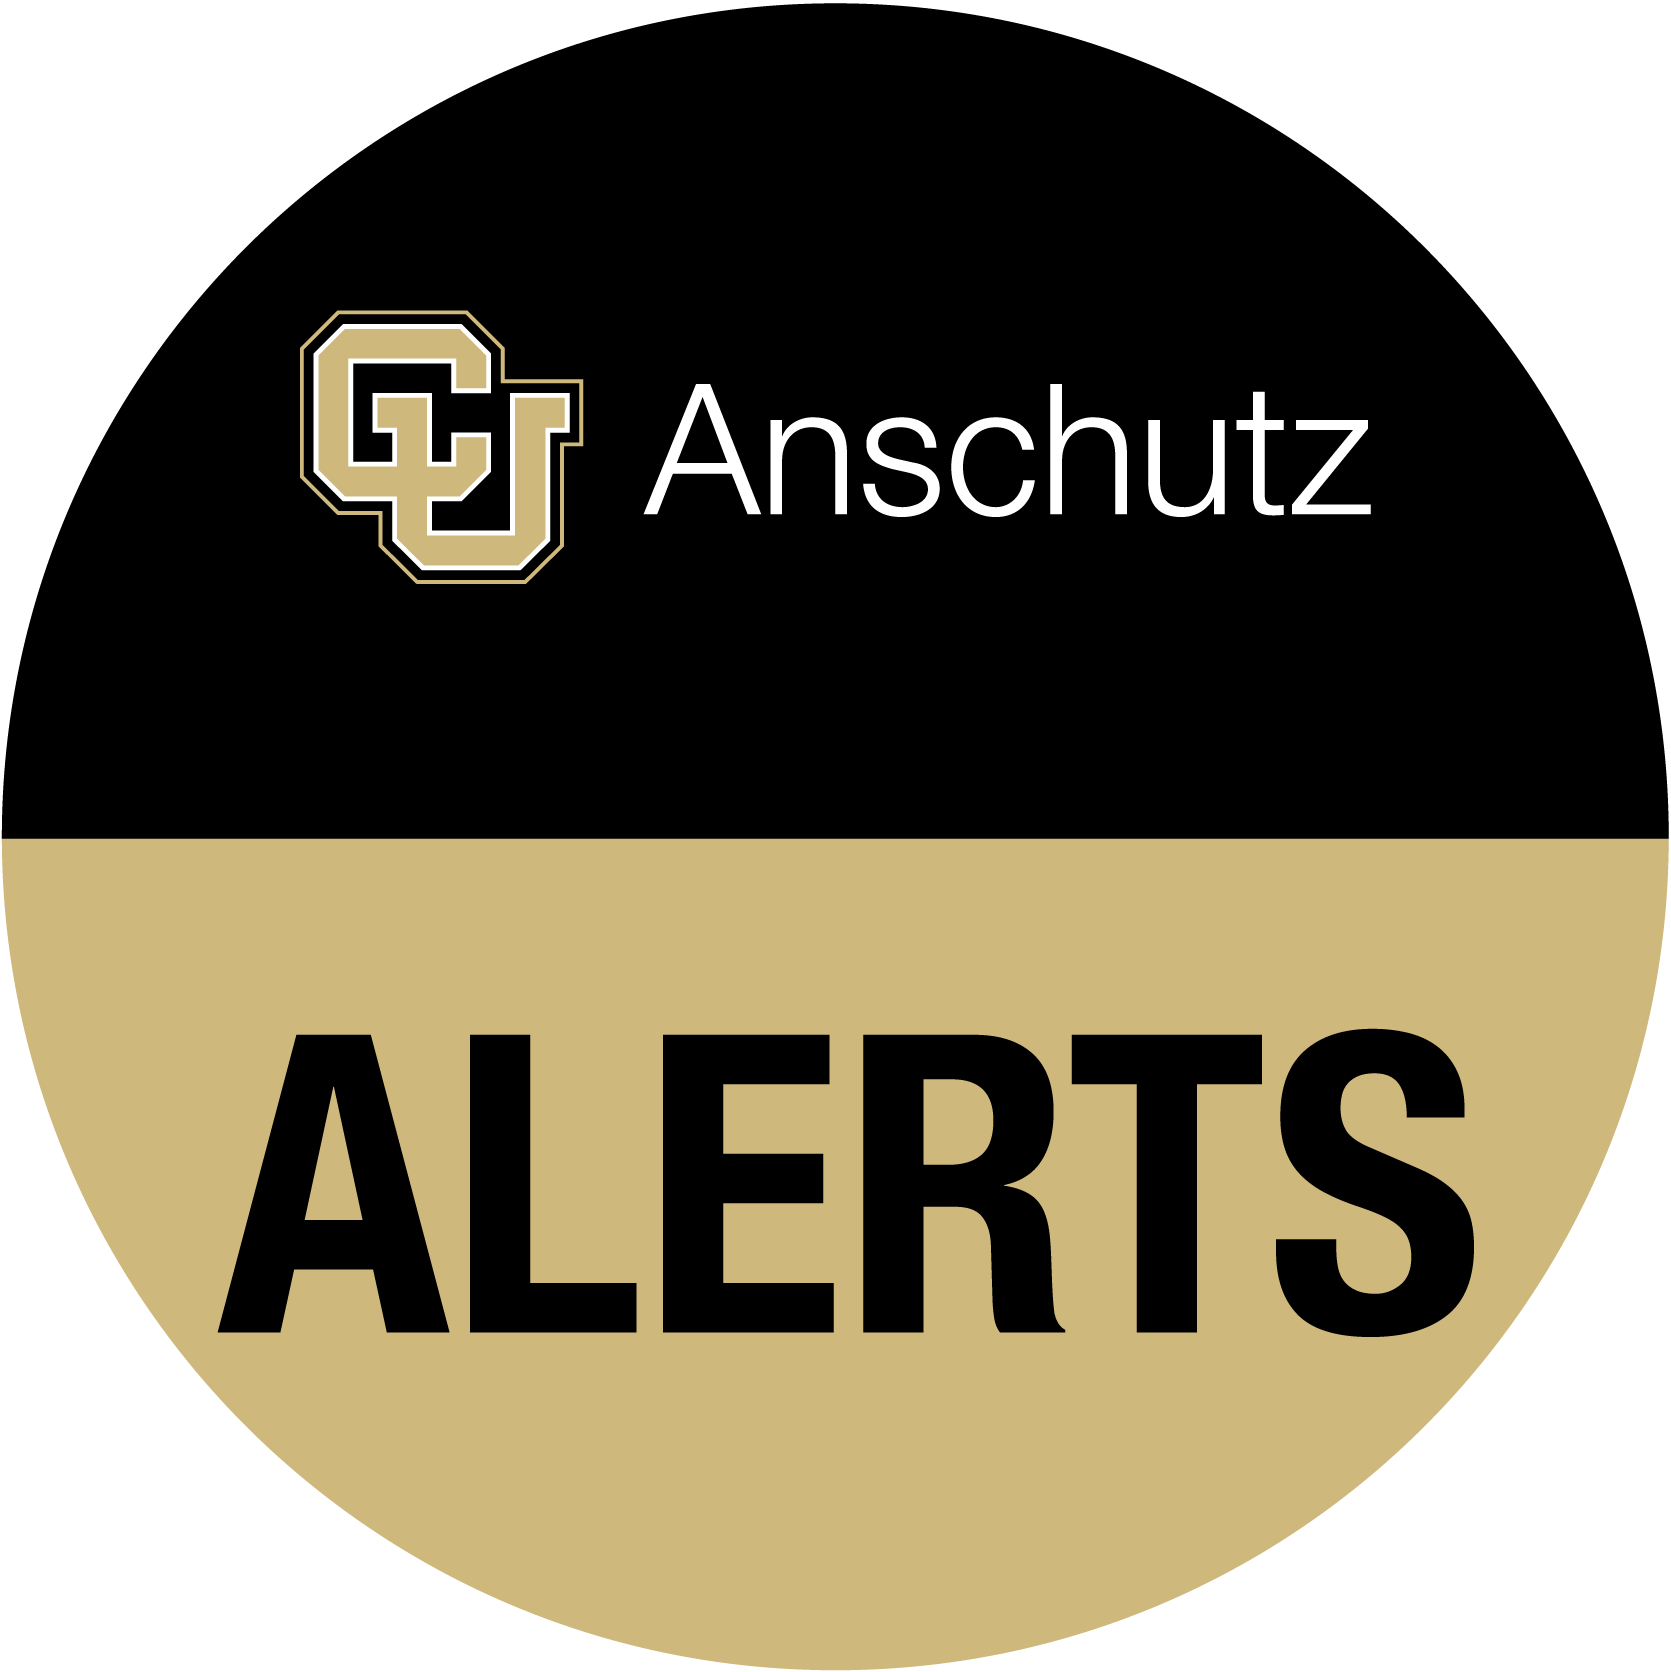 New CU Anschutz Alerts Icon graphic